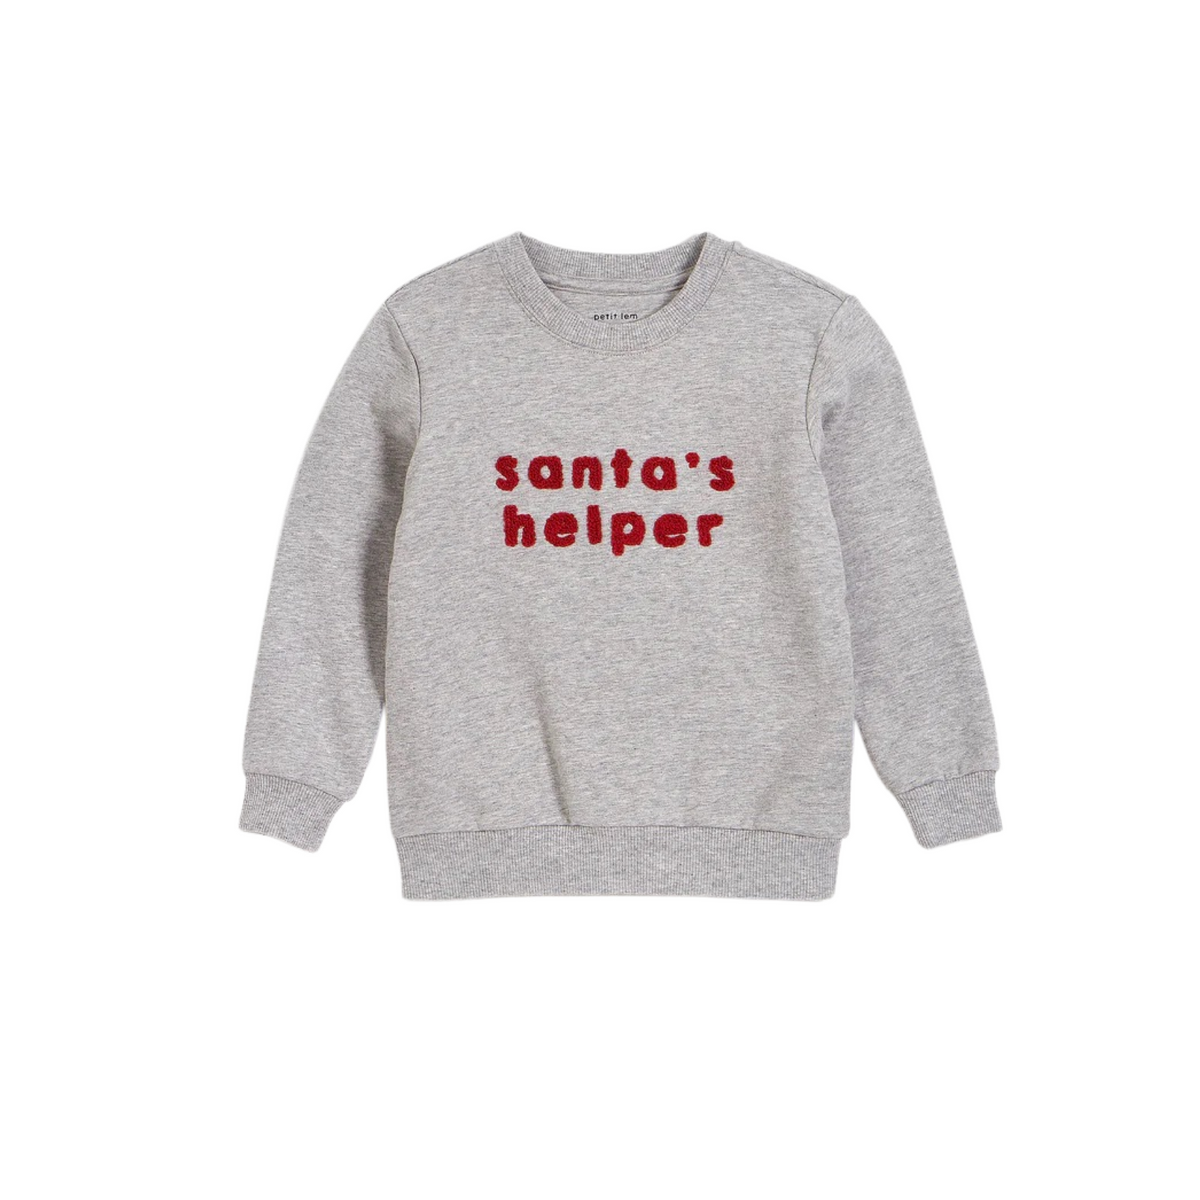 “Santa’s Helper” Sweatshirt